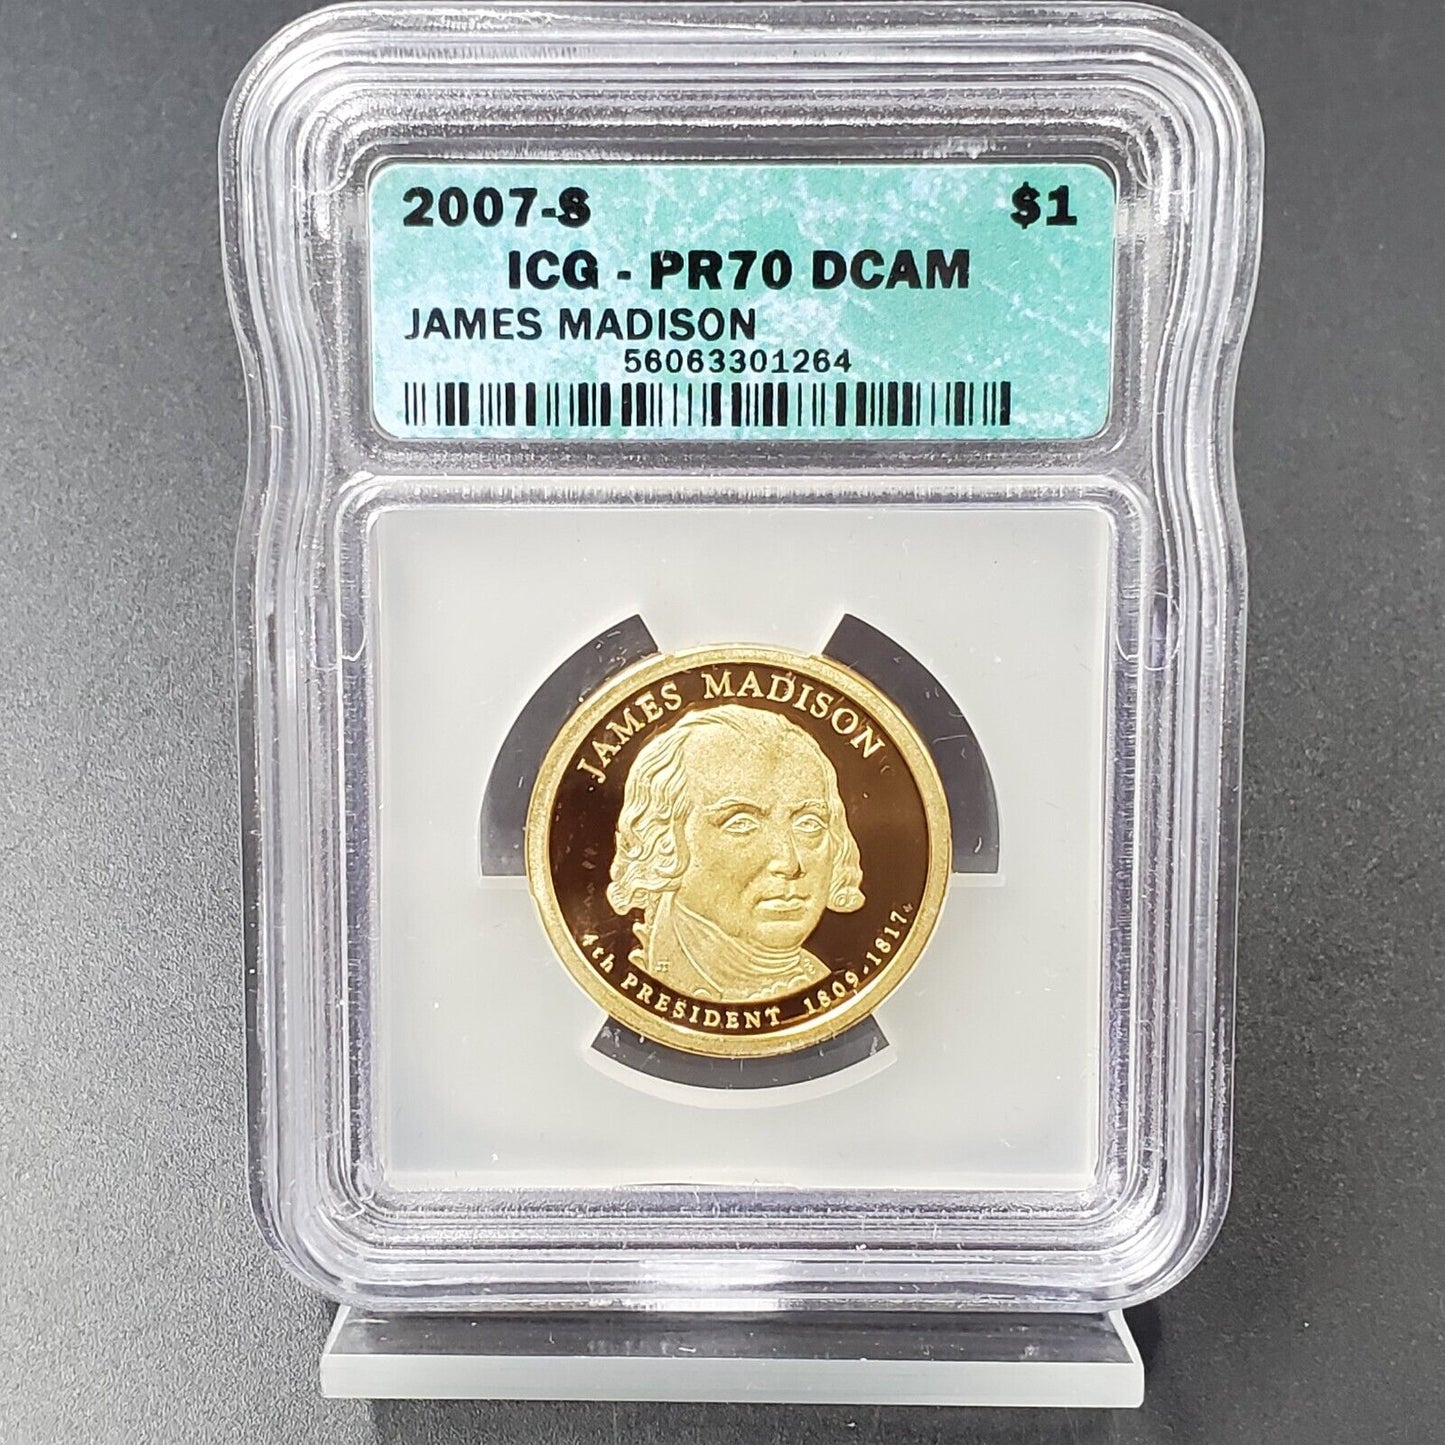 2007 S James Madison Presidential Dollar Coin ICG PF70 DCAM